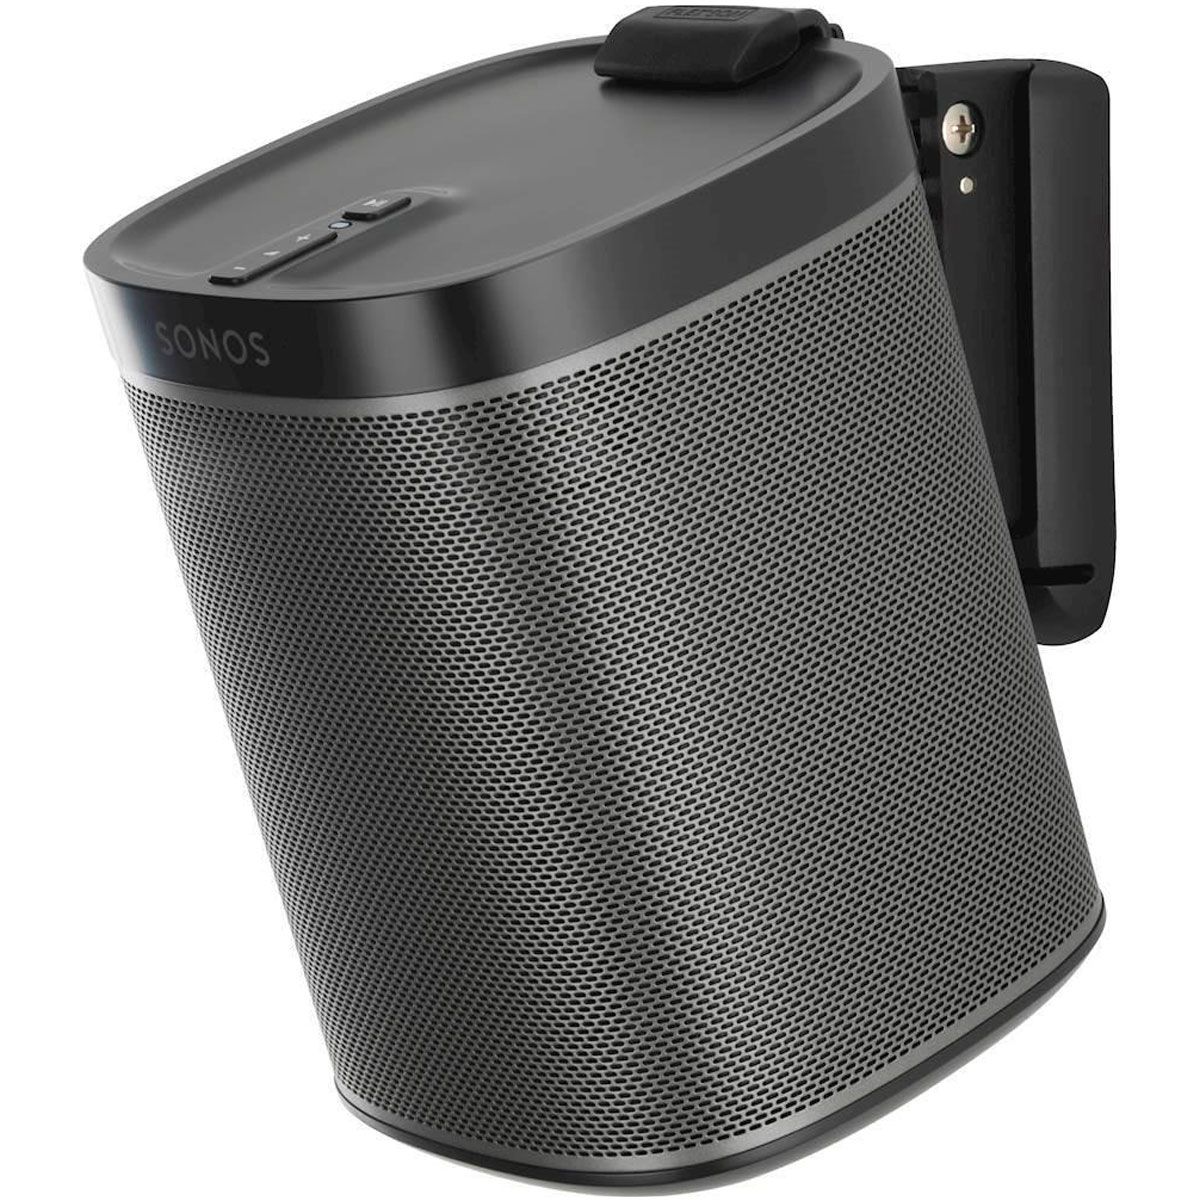 Flexson Wall Bracket for Sonos PLAY:1 Speakers w/ Installation Hardware - Black - Pair